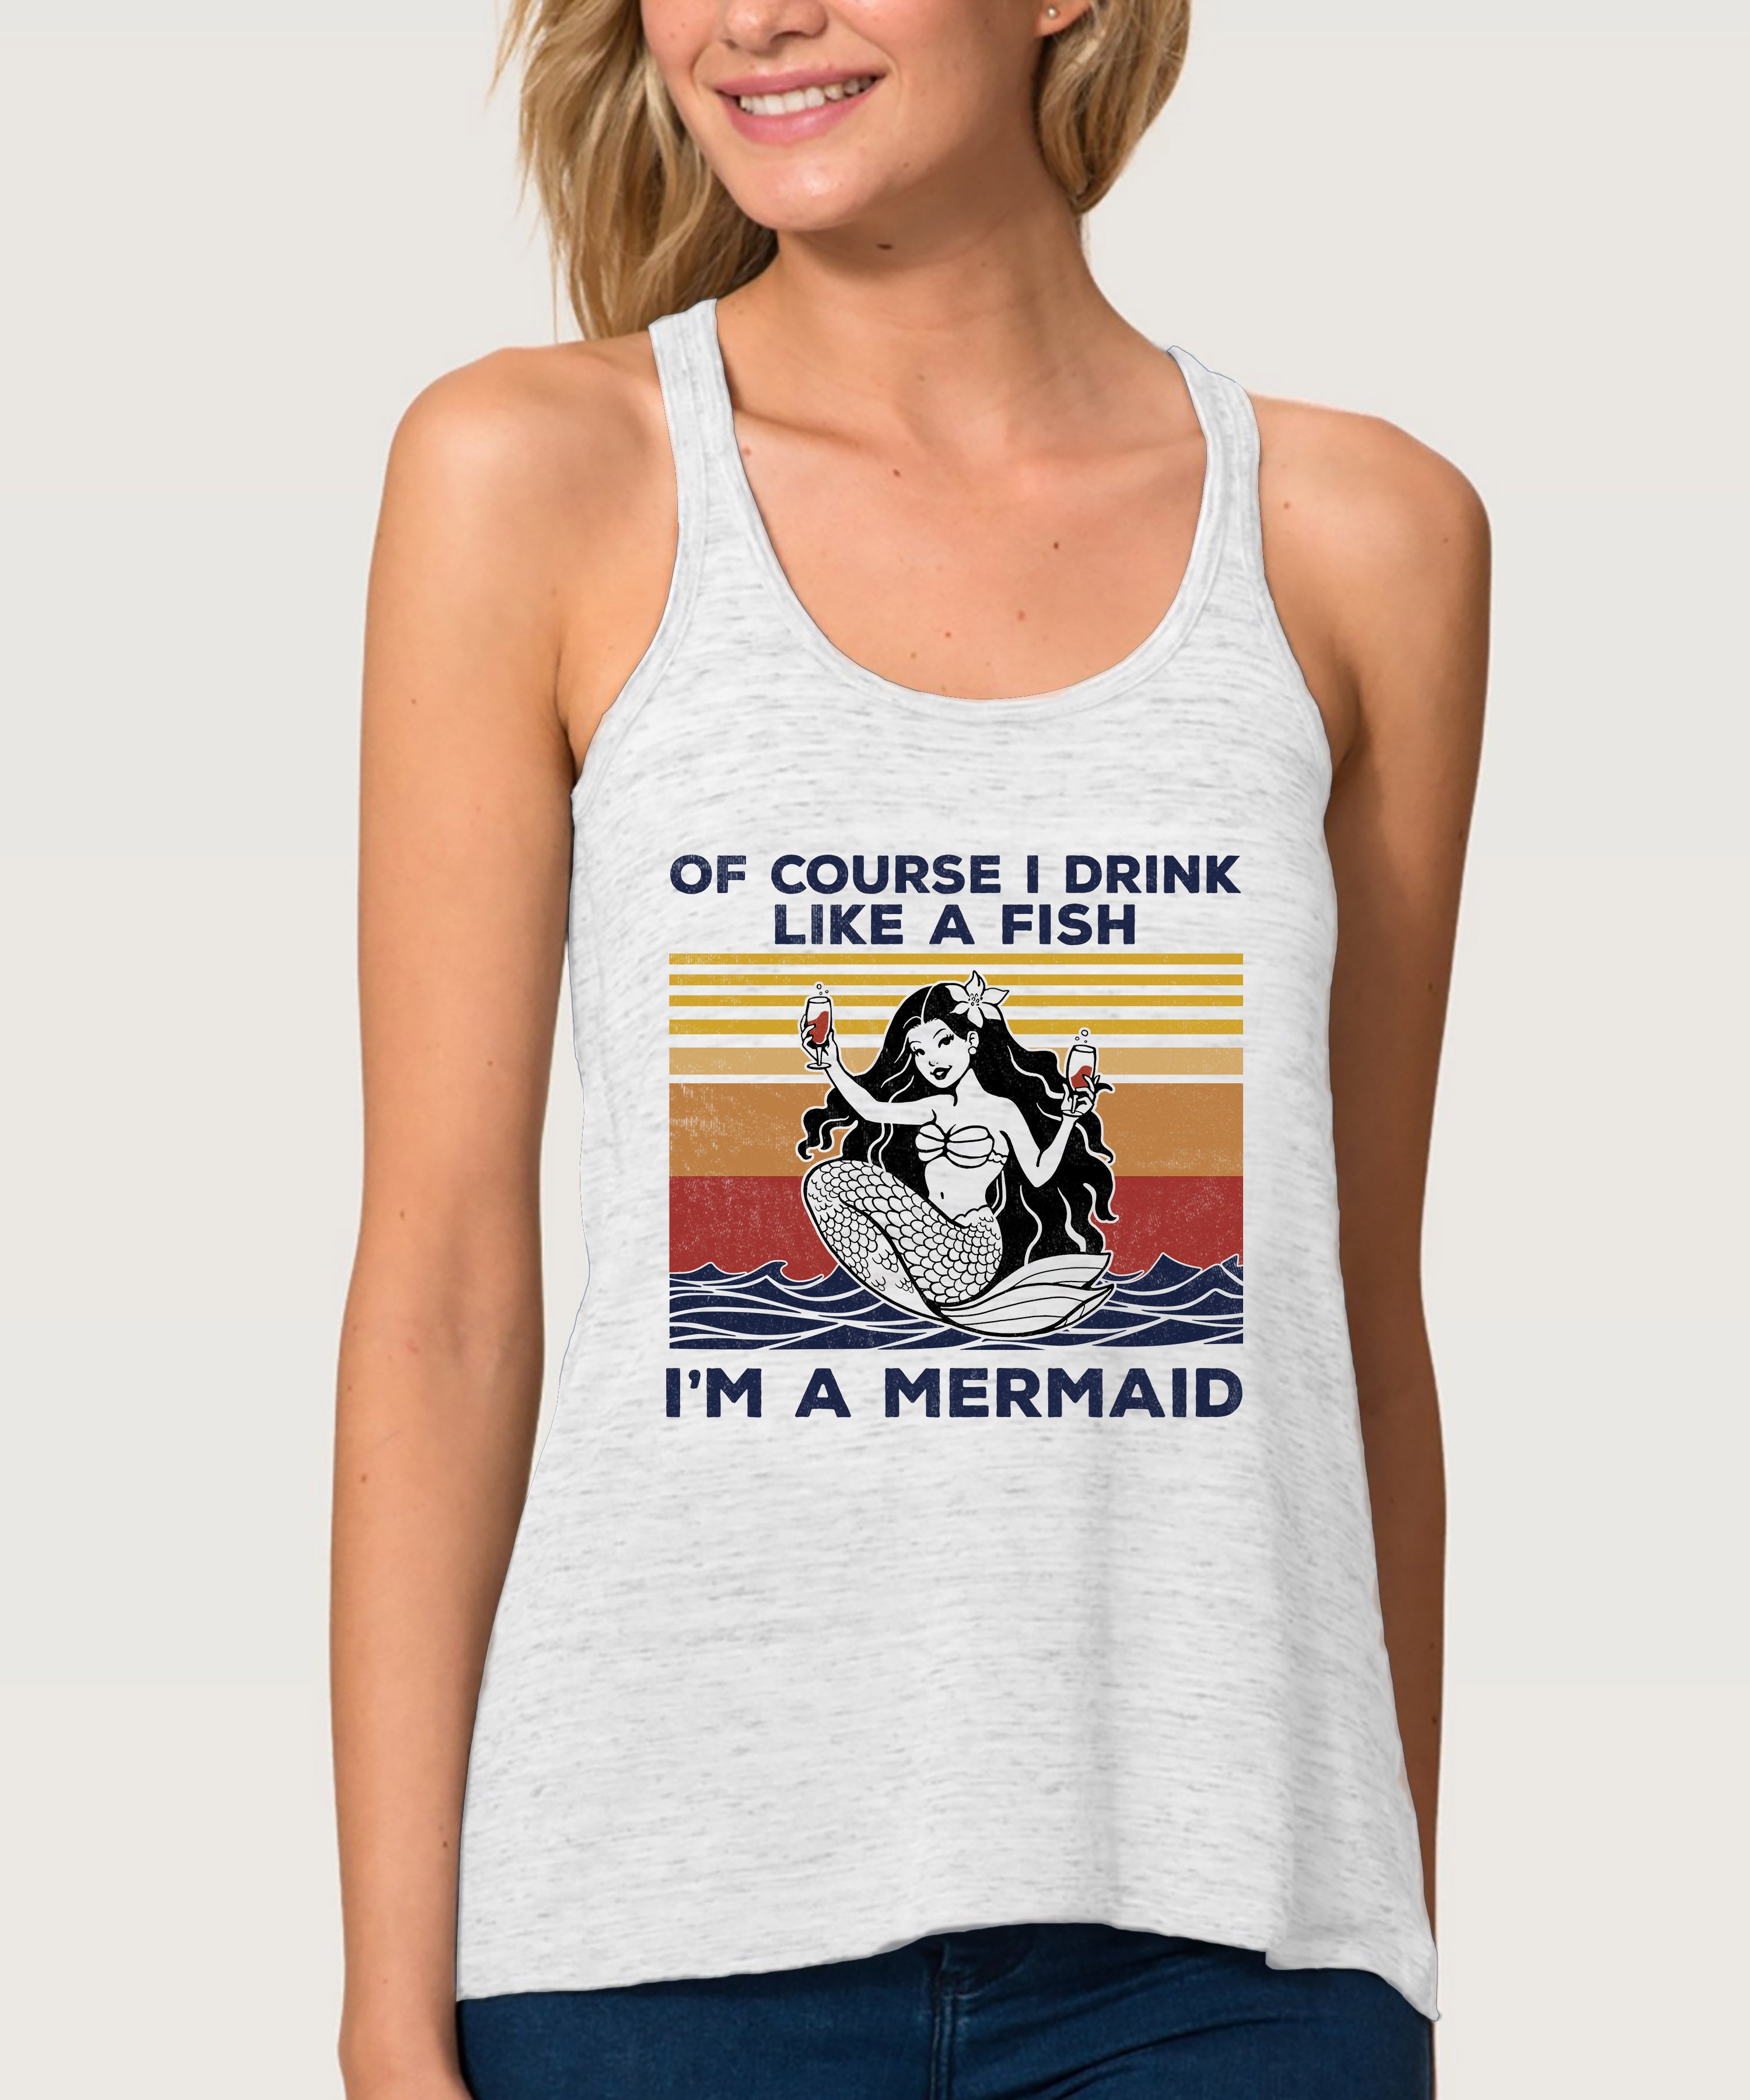 Mermaid Tank Top – Of Course I Drink Like a Fish I’m a Mermaid